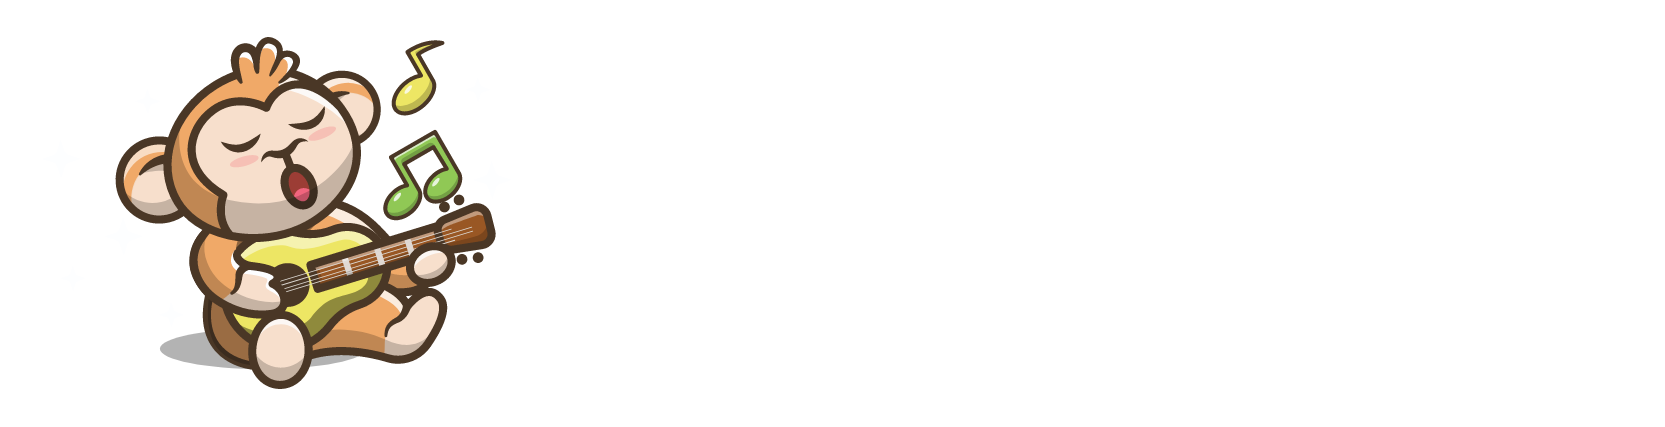 Free Guitar Ringtones